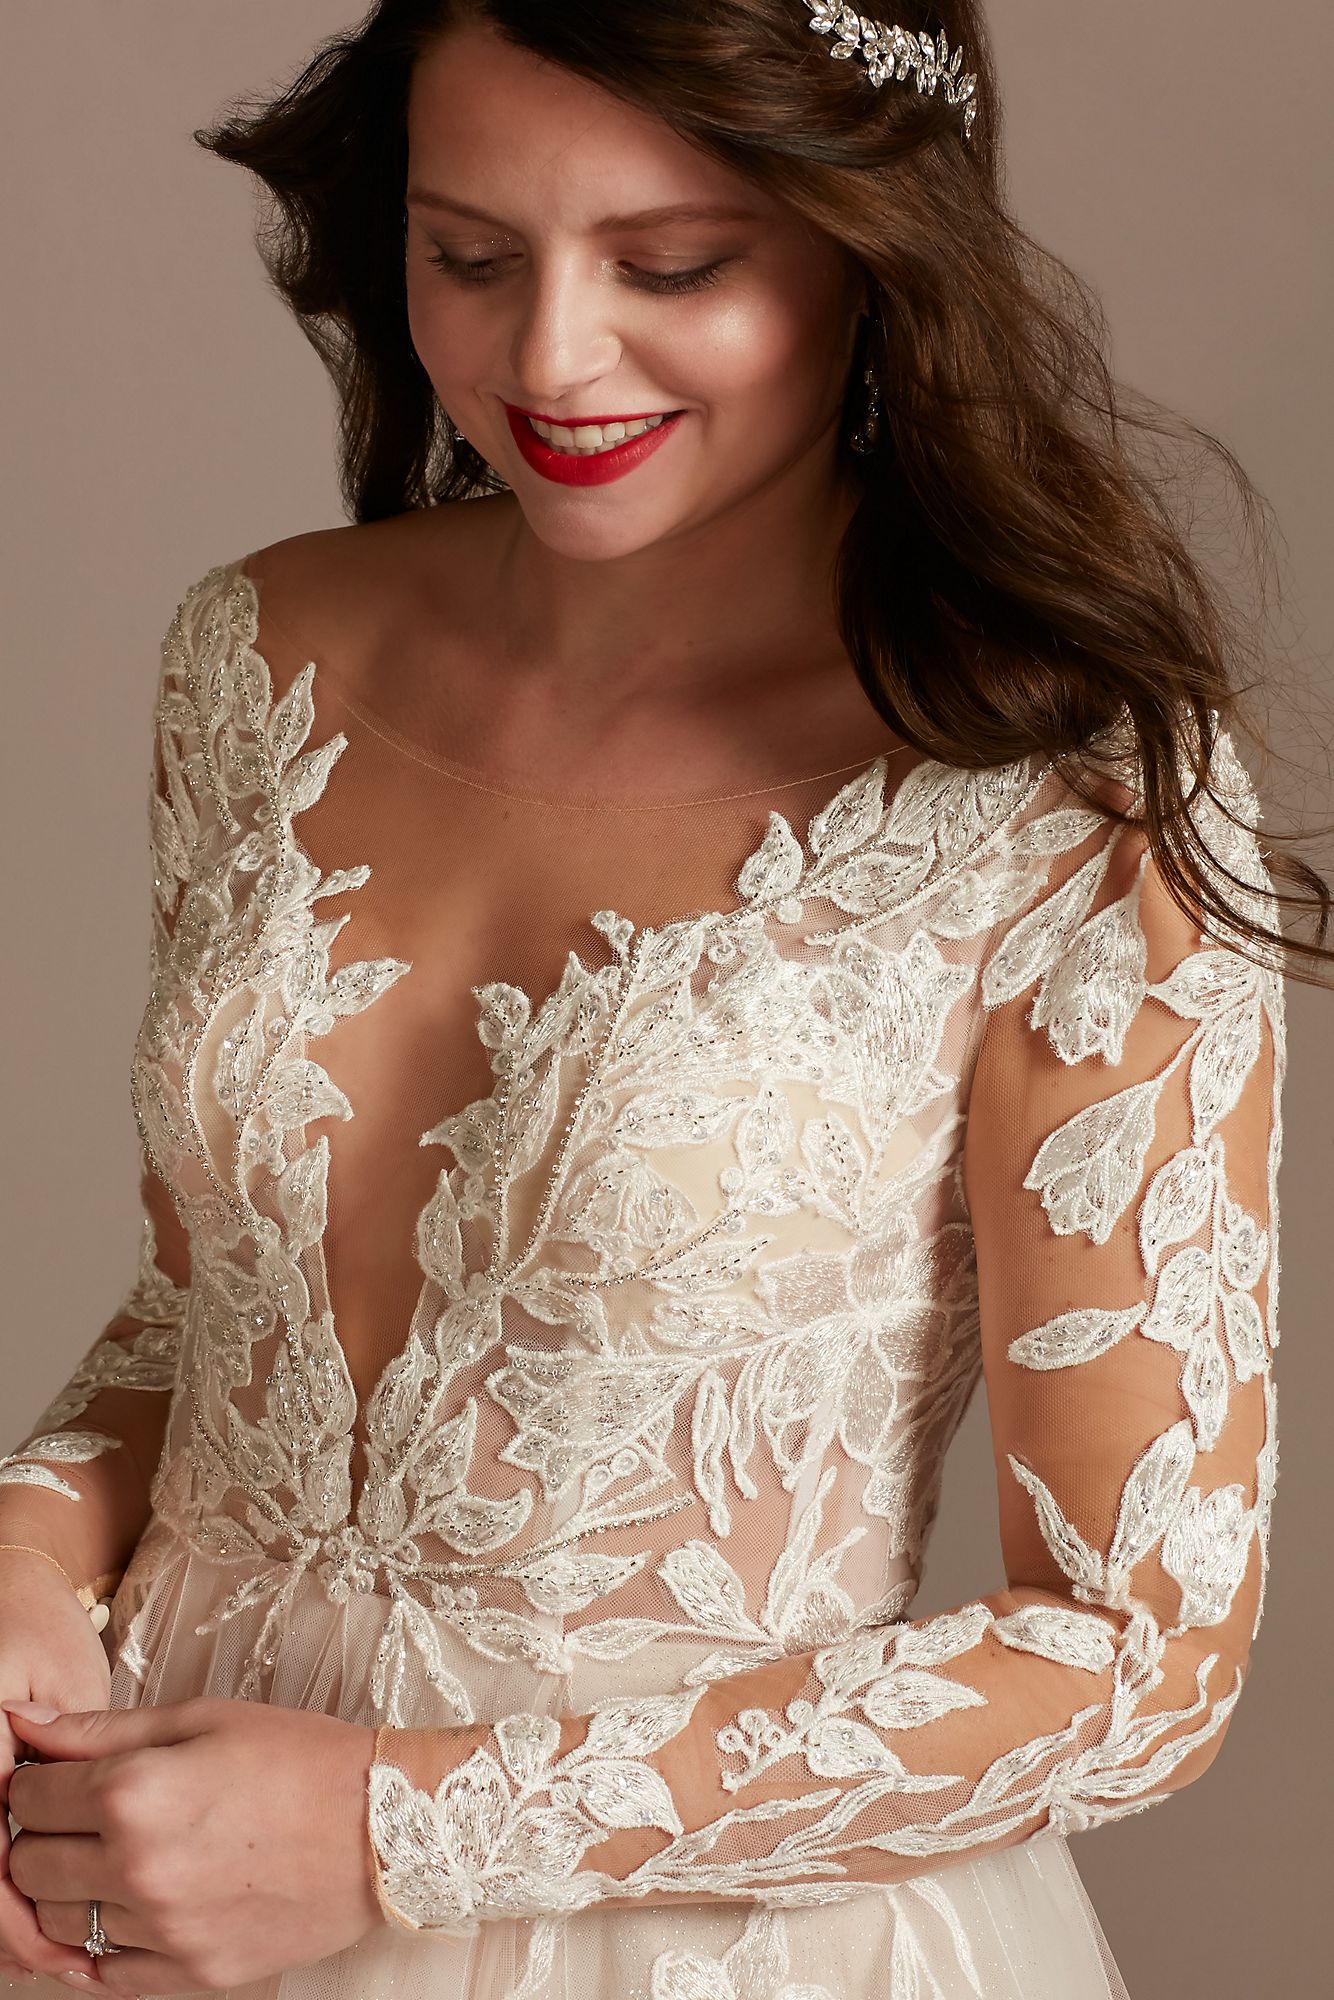 Long Sleeve Lace Appliqued Tall Wedding Dress Galina Signature 4XLSLSWG862